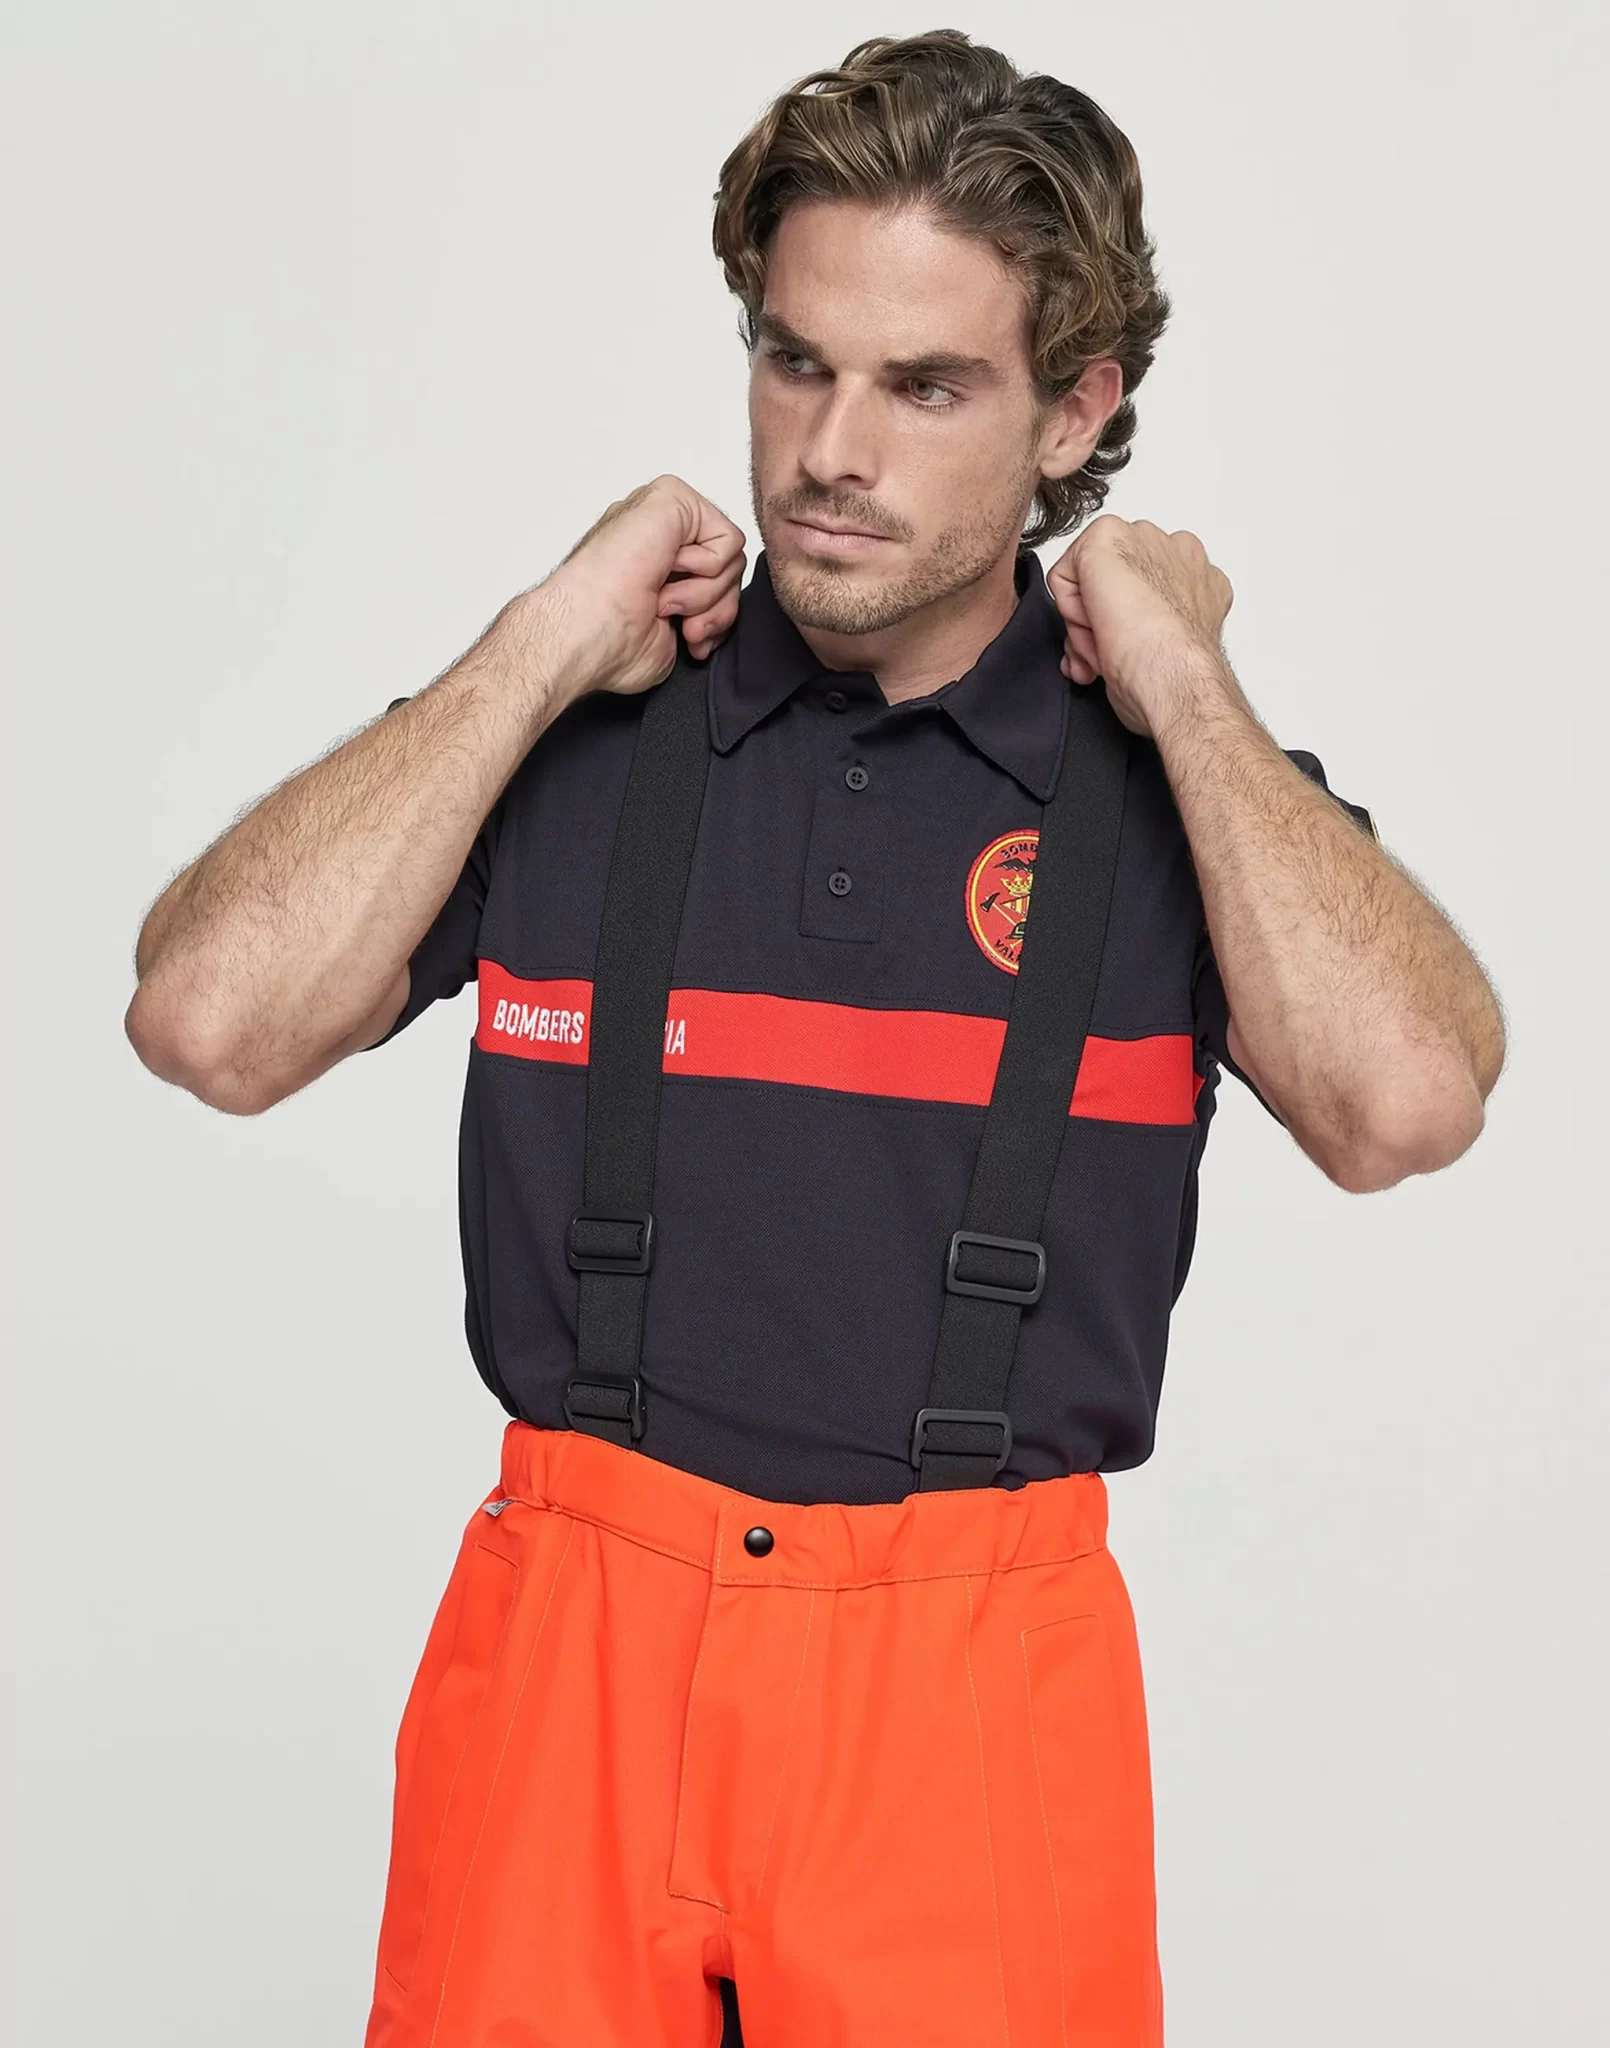 uniformes bomberos polo manga corta y pantalón impermeable